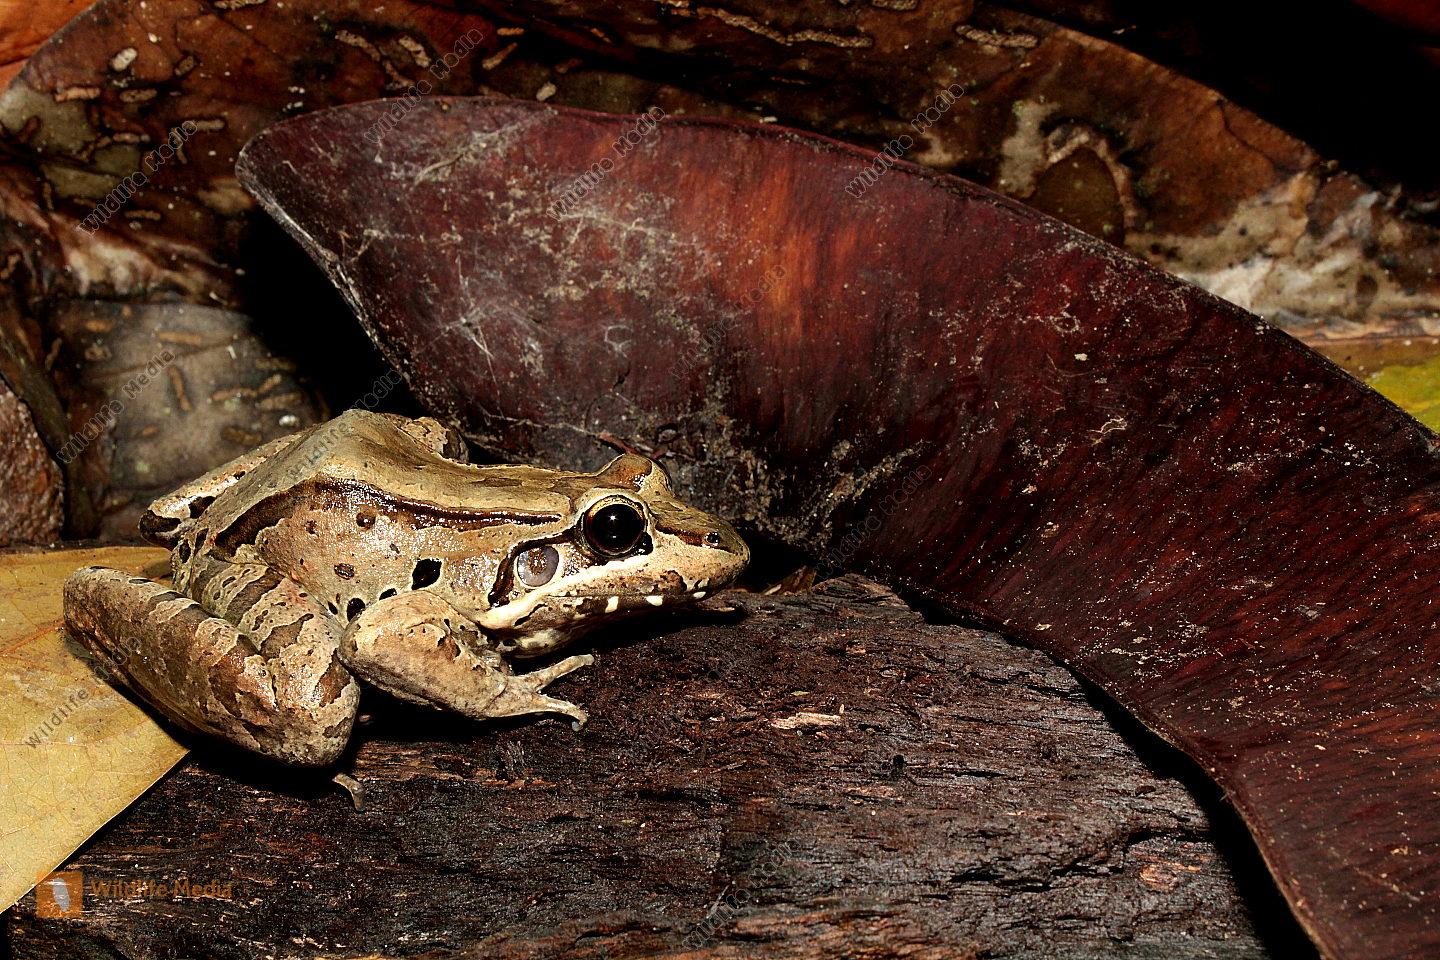 Leptodactylus guyanensis